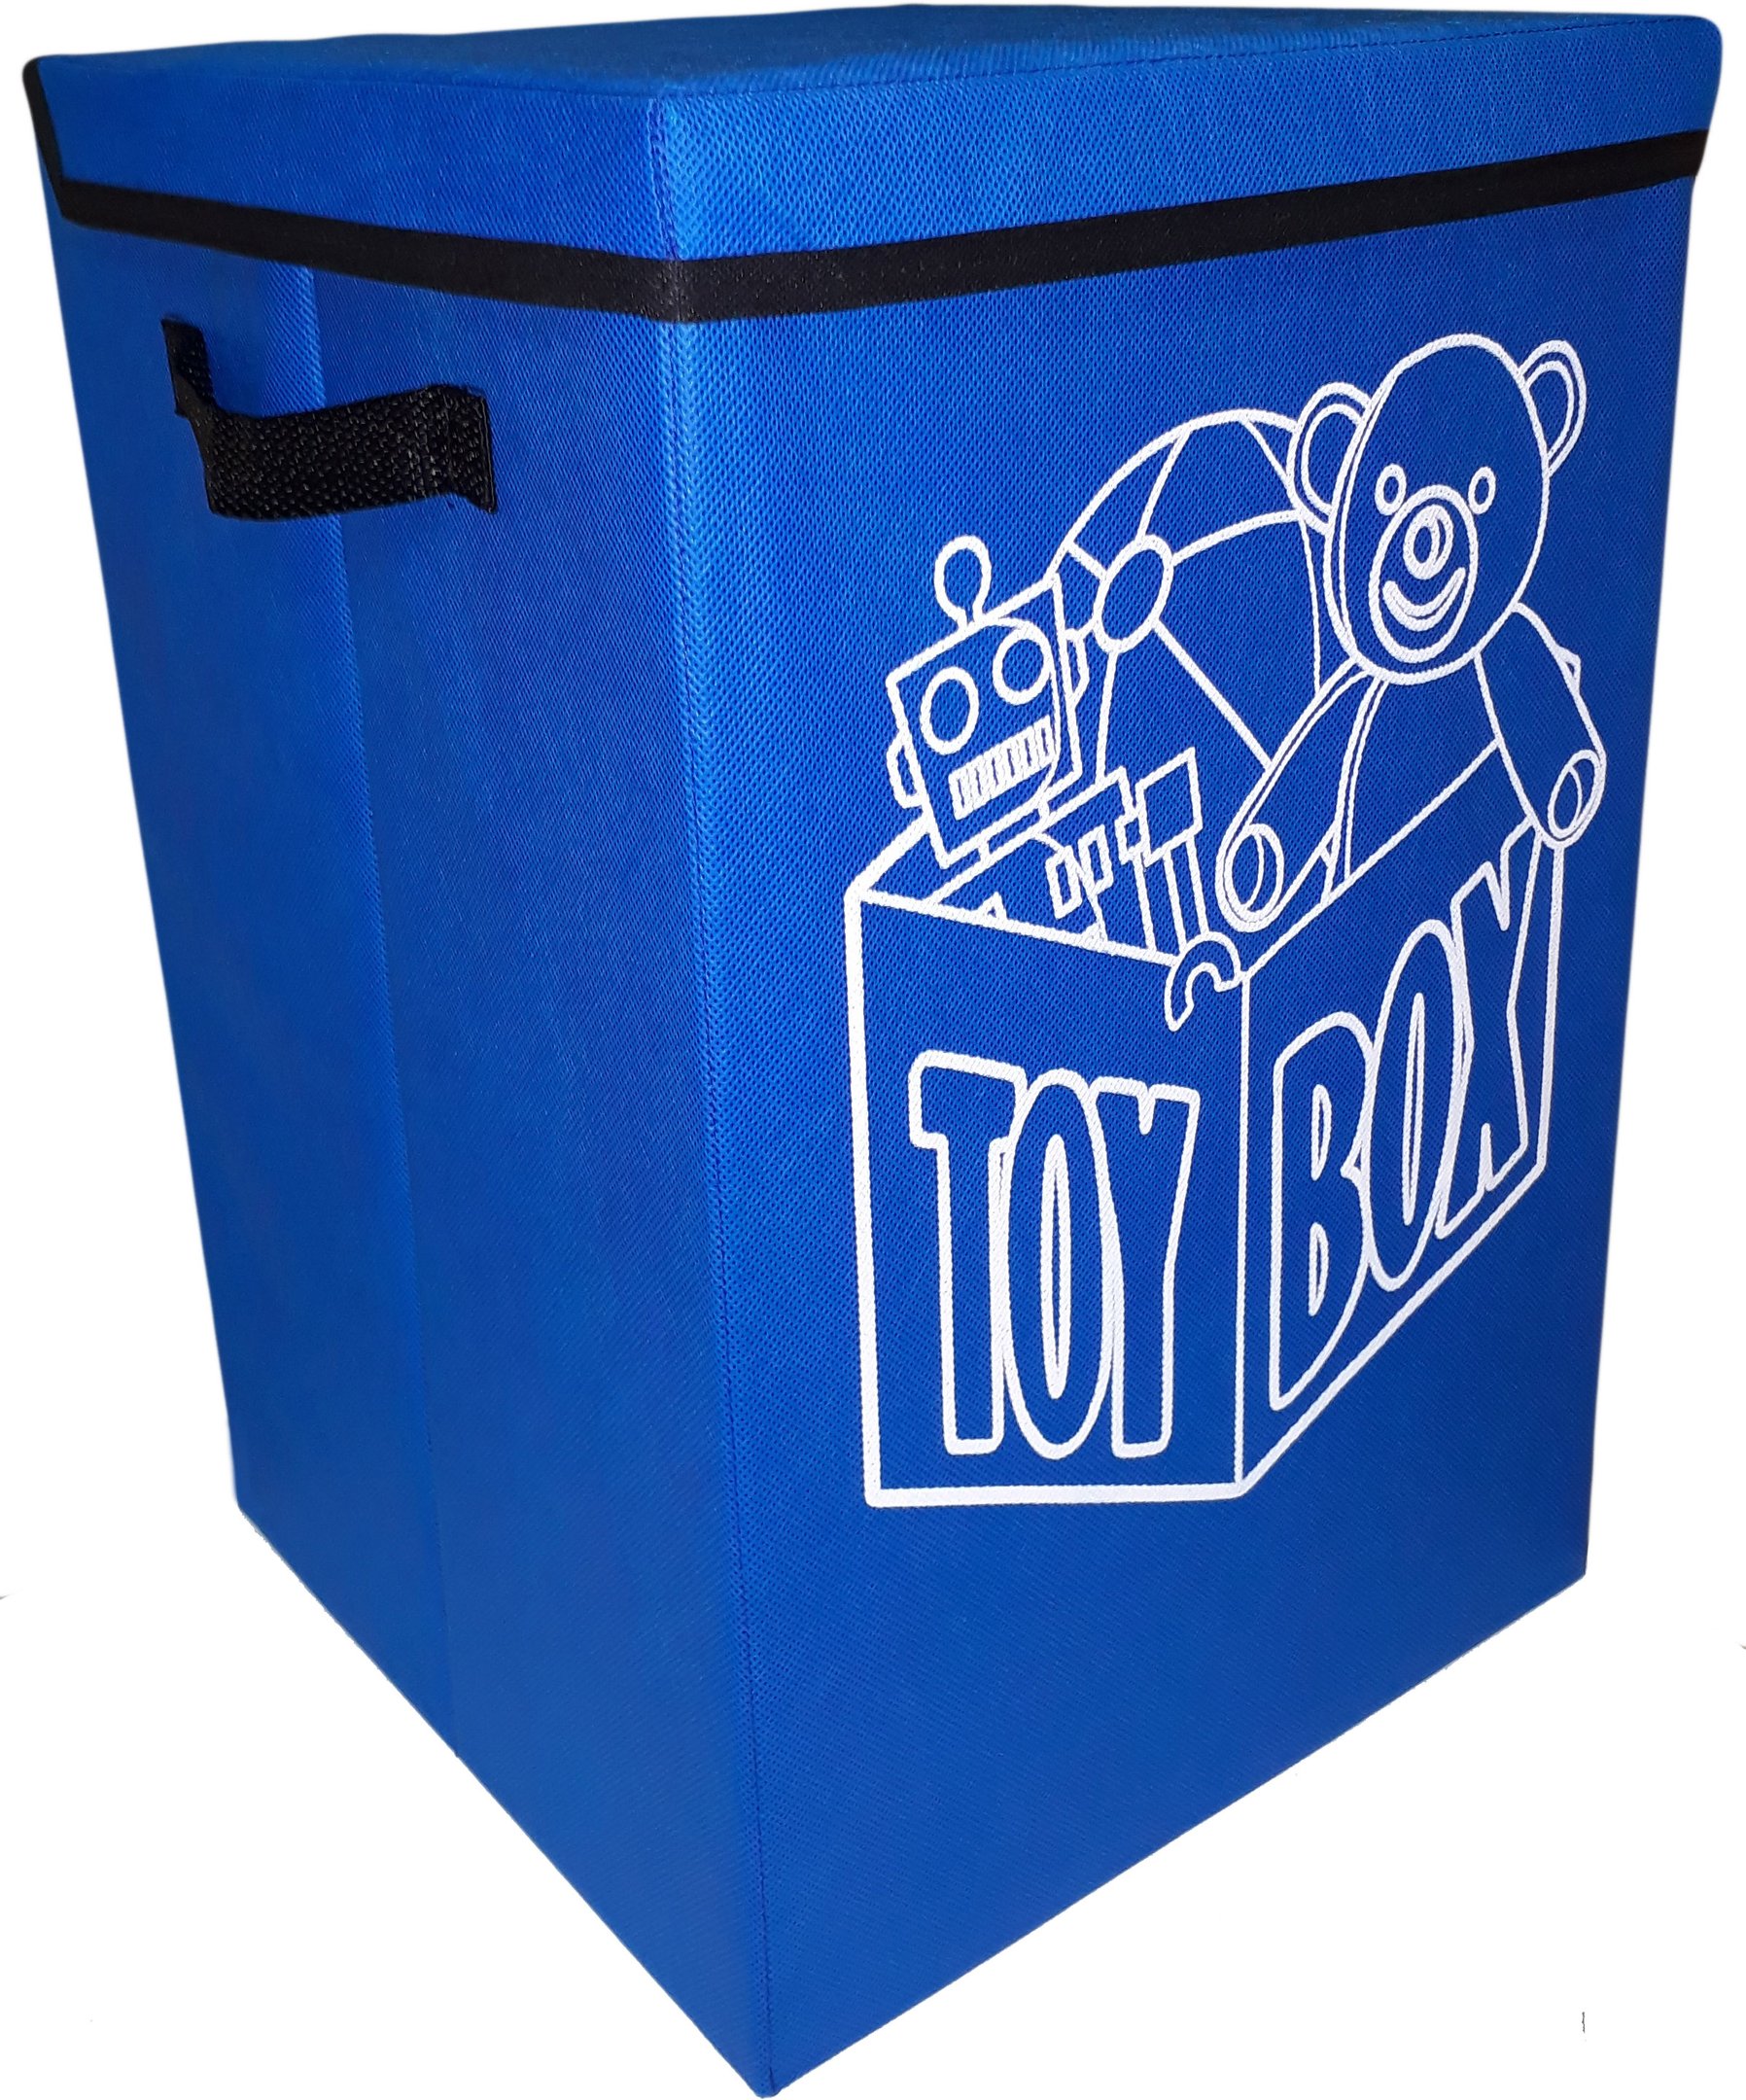 Cesto Porta Brinquedo, Caixa De Brinquedo - Azul